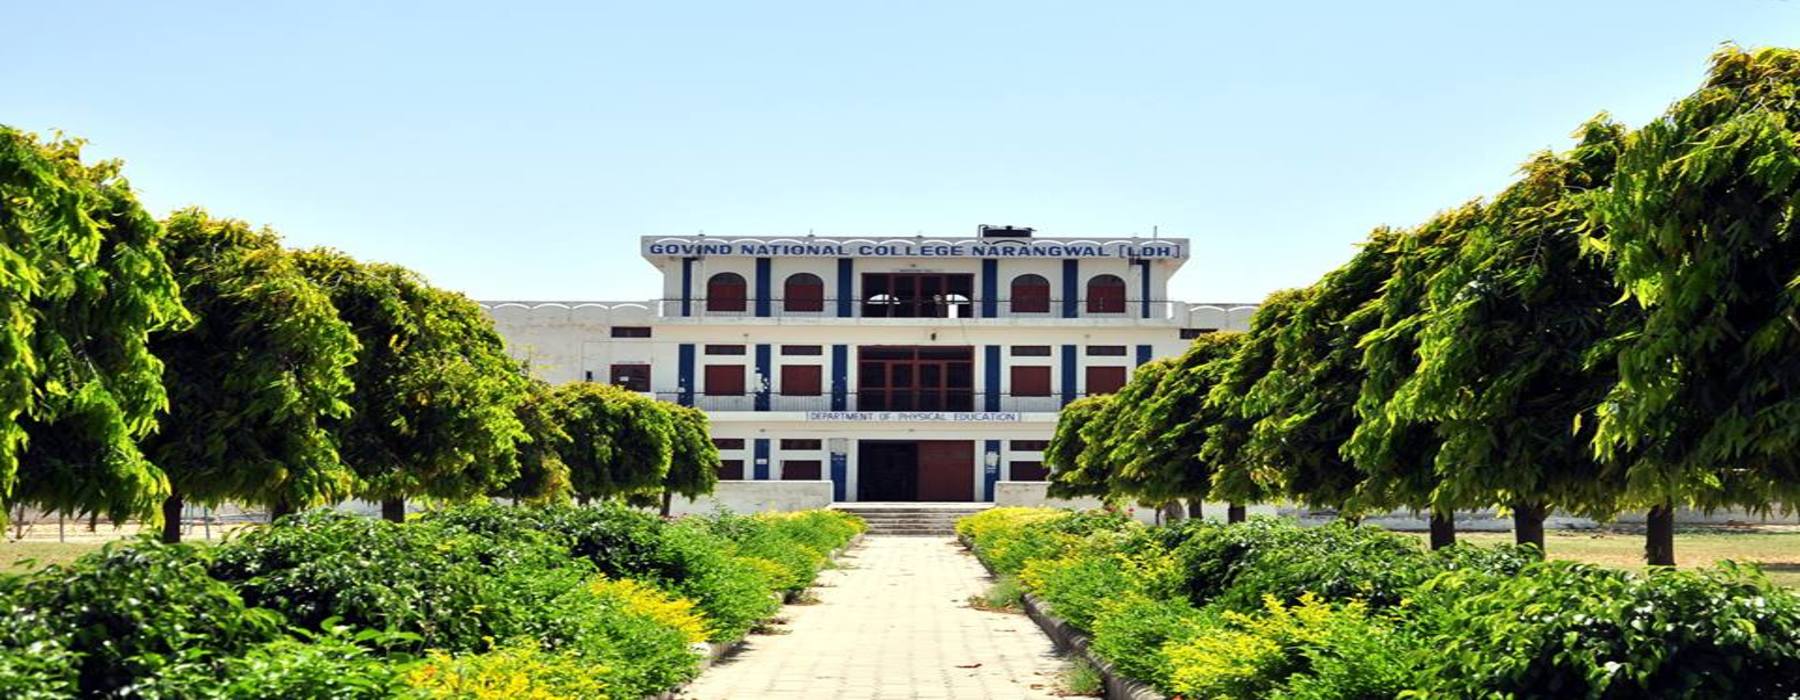 Govind National College, Ludhiana Image